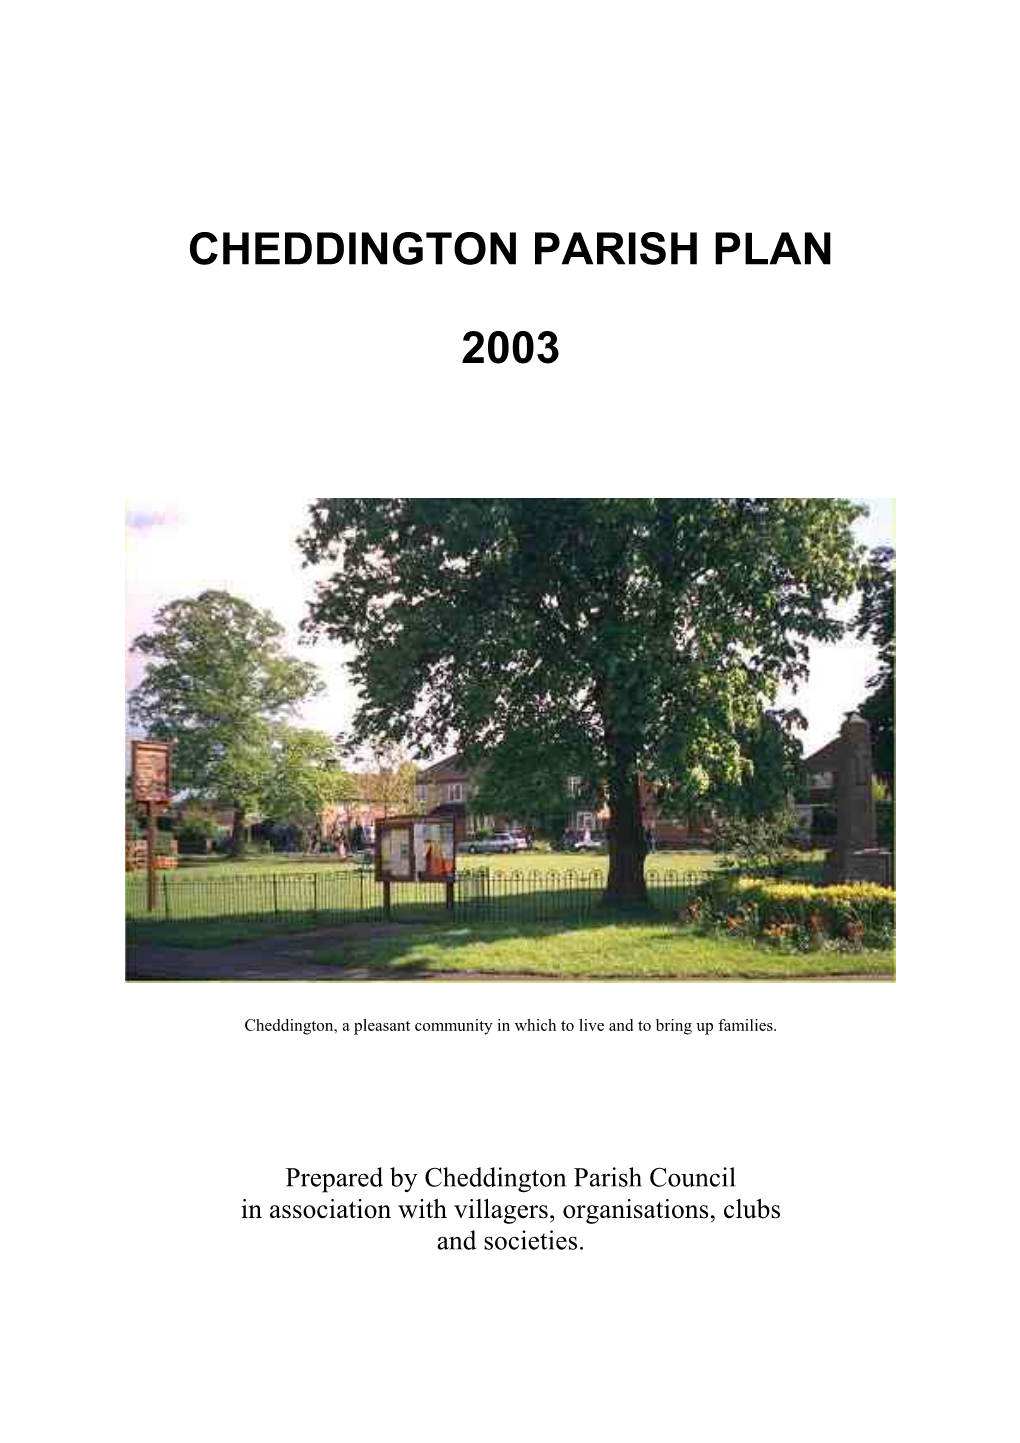 Cheddington Parish Plan 2003